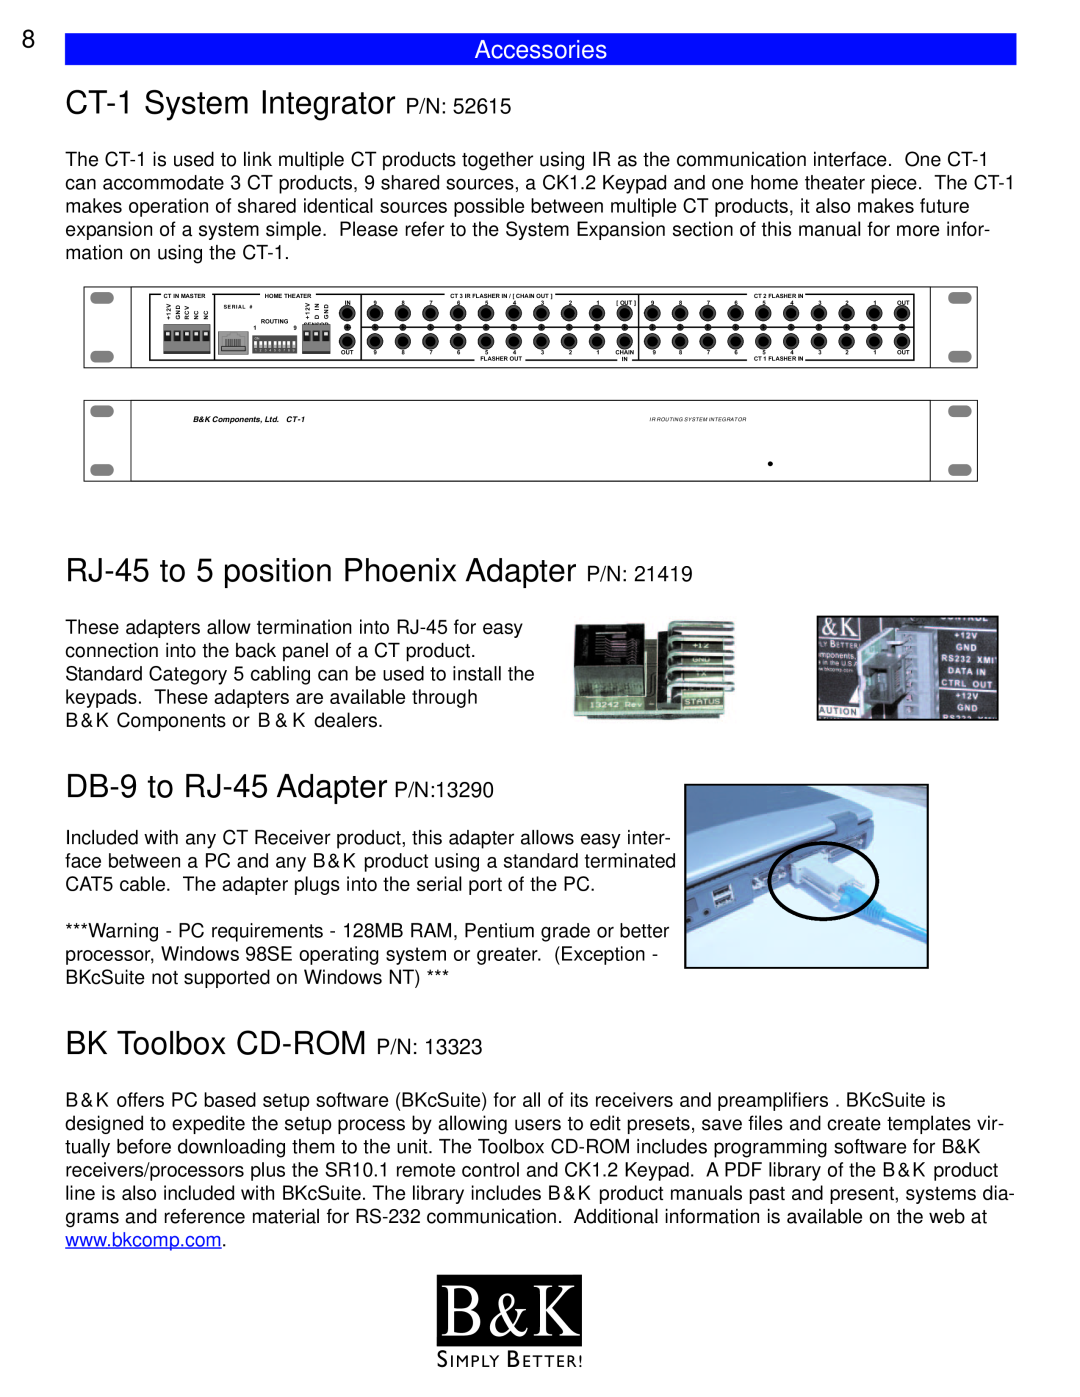 B&K CT310, CT600 CT-1System Integrator P/N, RJ-45to 5 position Phoenix Adapter P/N, DB-9to RJ-45Adapter P/N:13290, B & K 